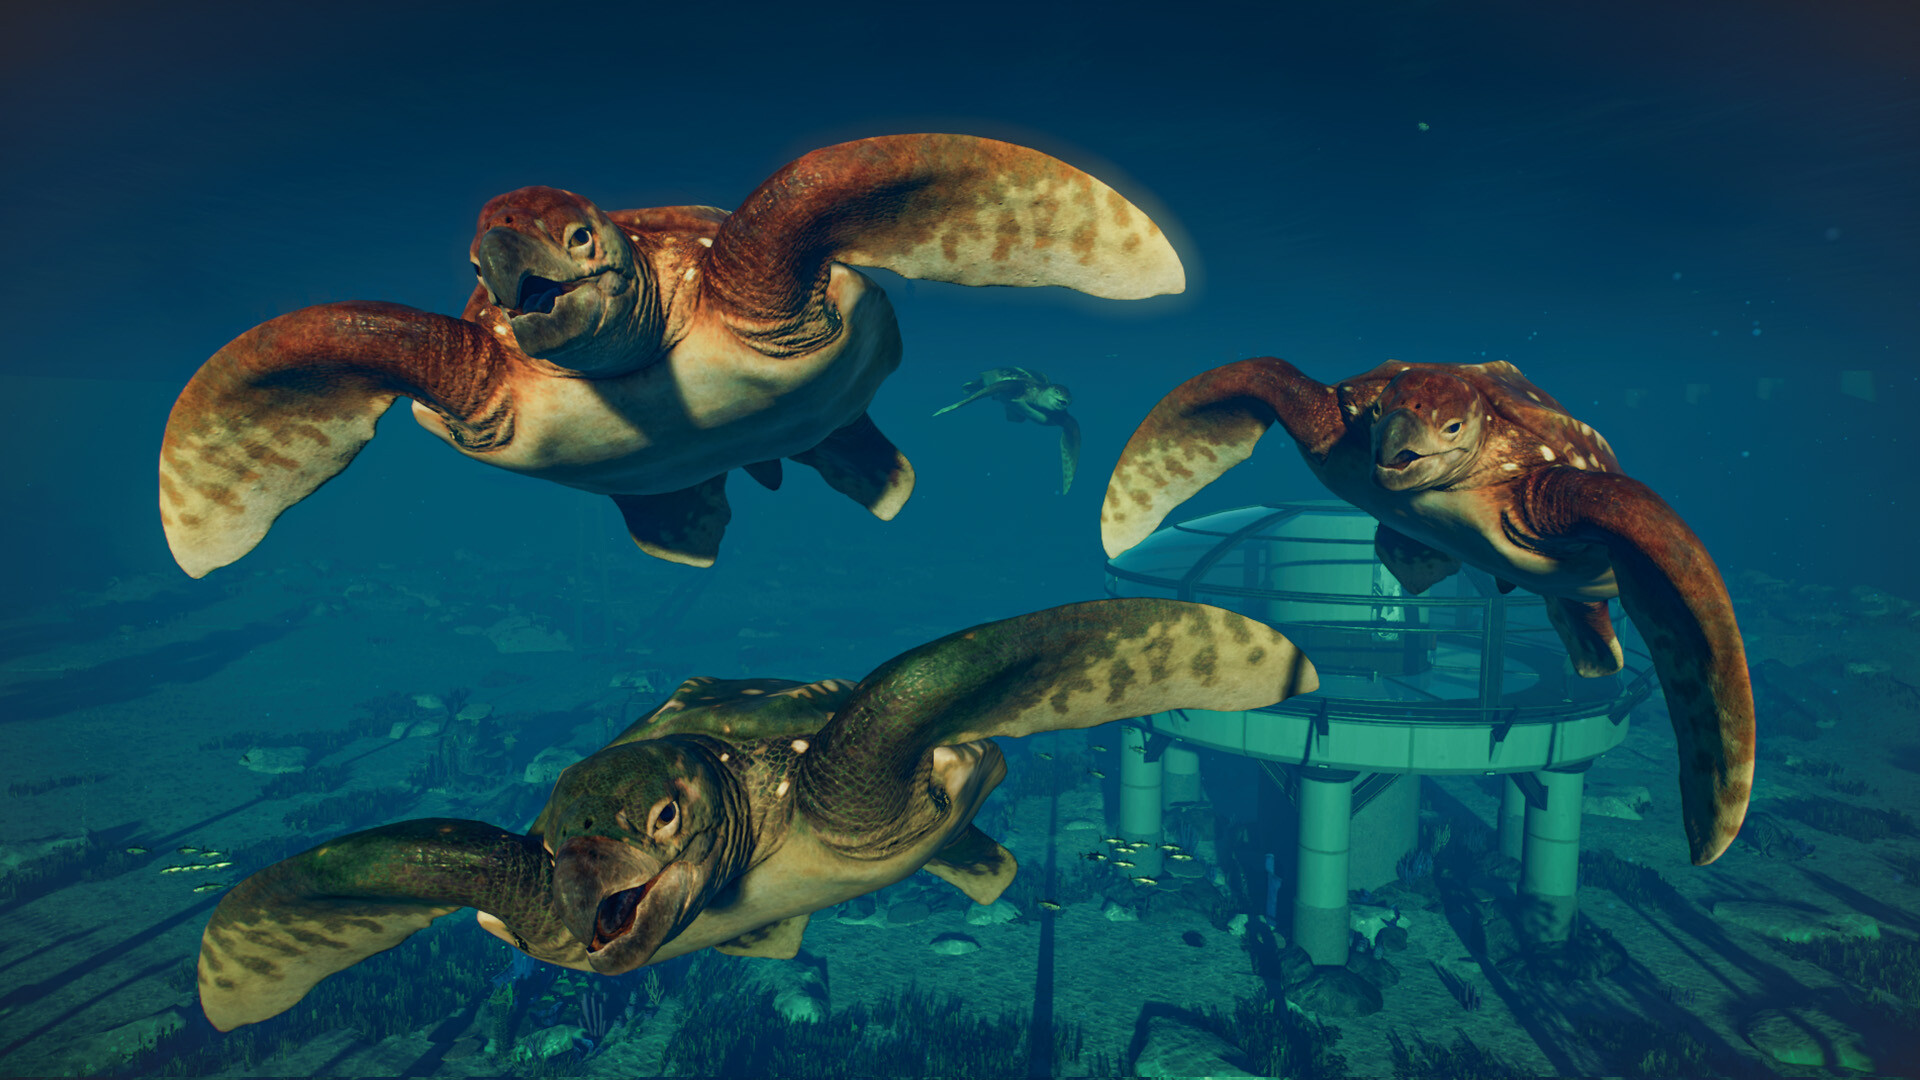 Jurassic World Evolution 2 - Prehistoric Marine Species Pack DLC EU Steam CD Key